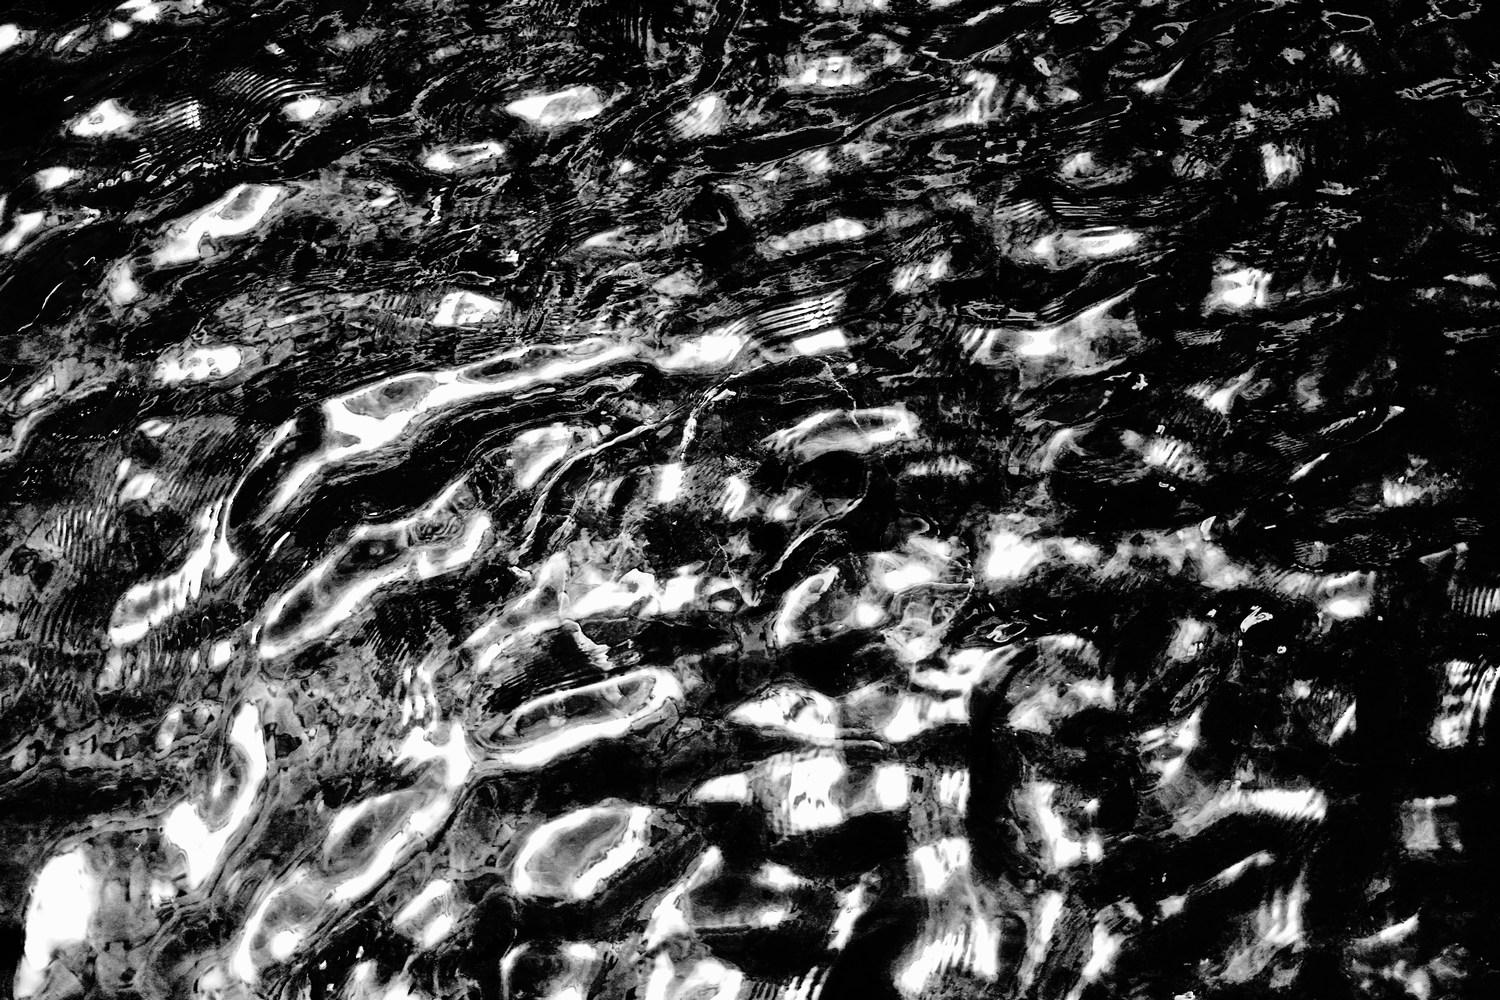 Nick Schleich Black and White Photograph - Untitled #19 (Australia Series)